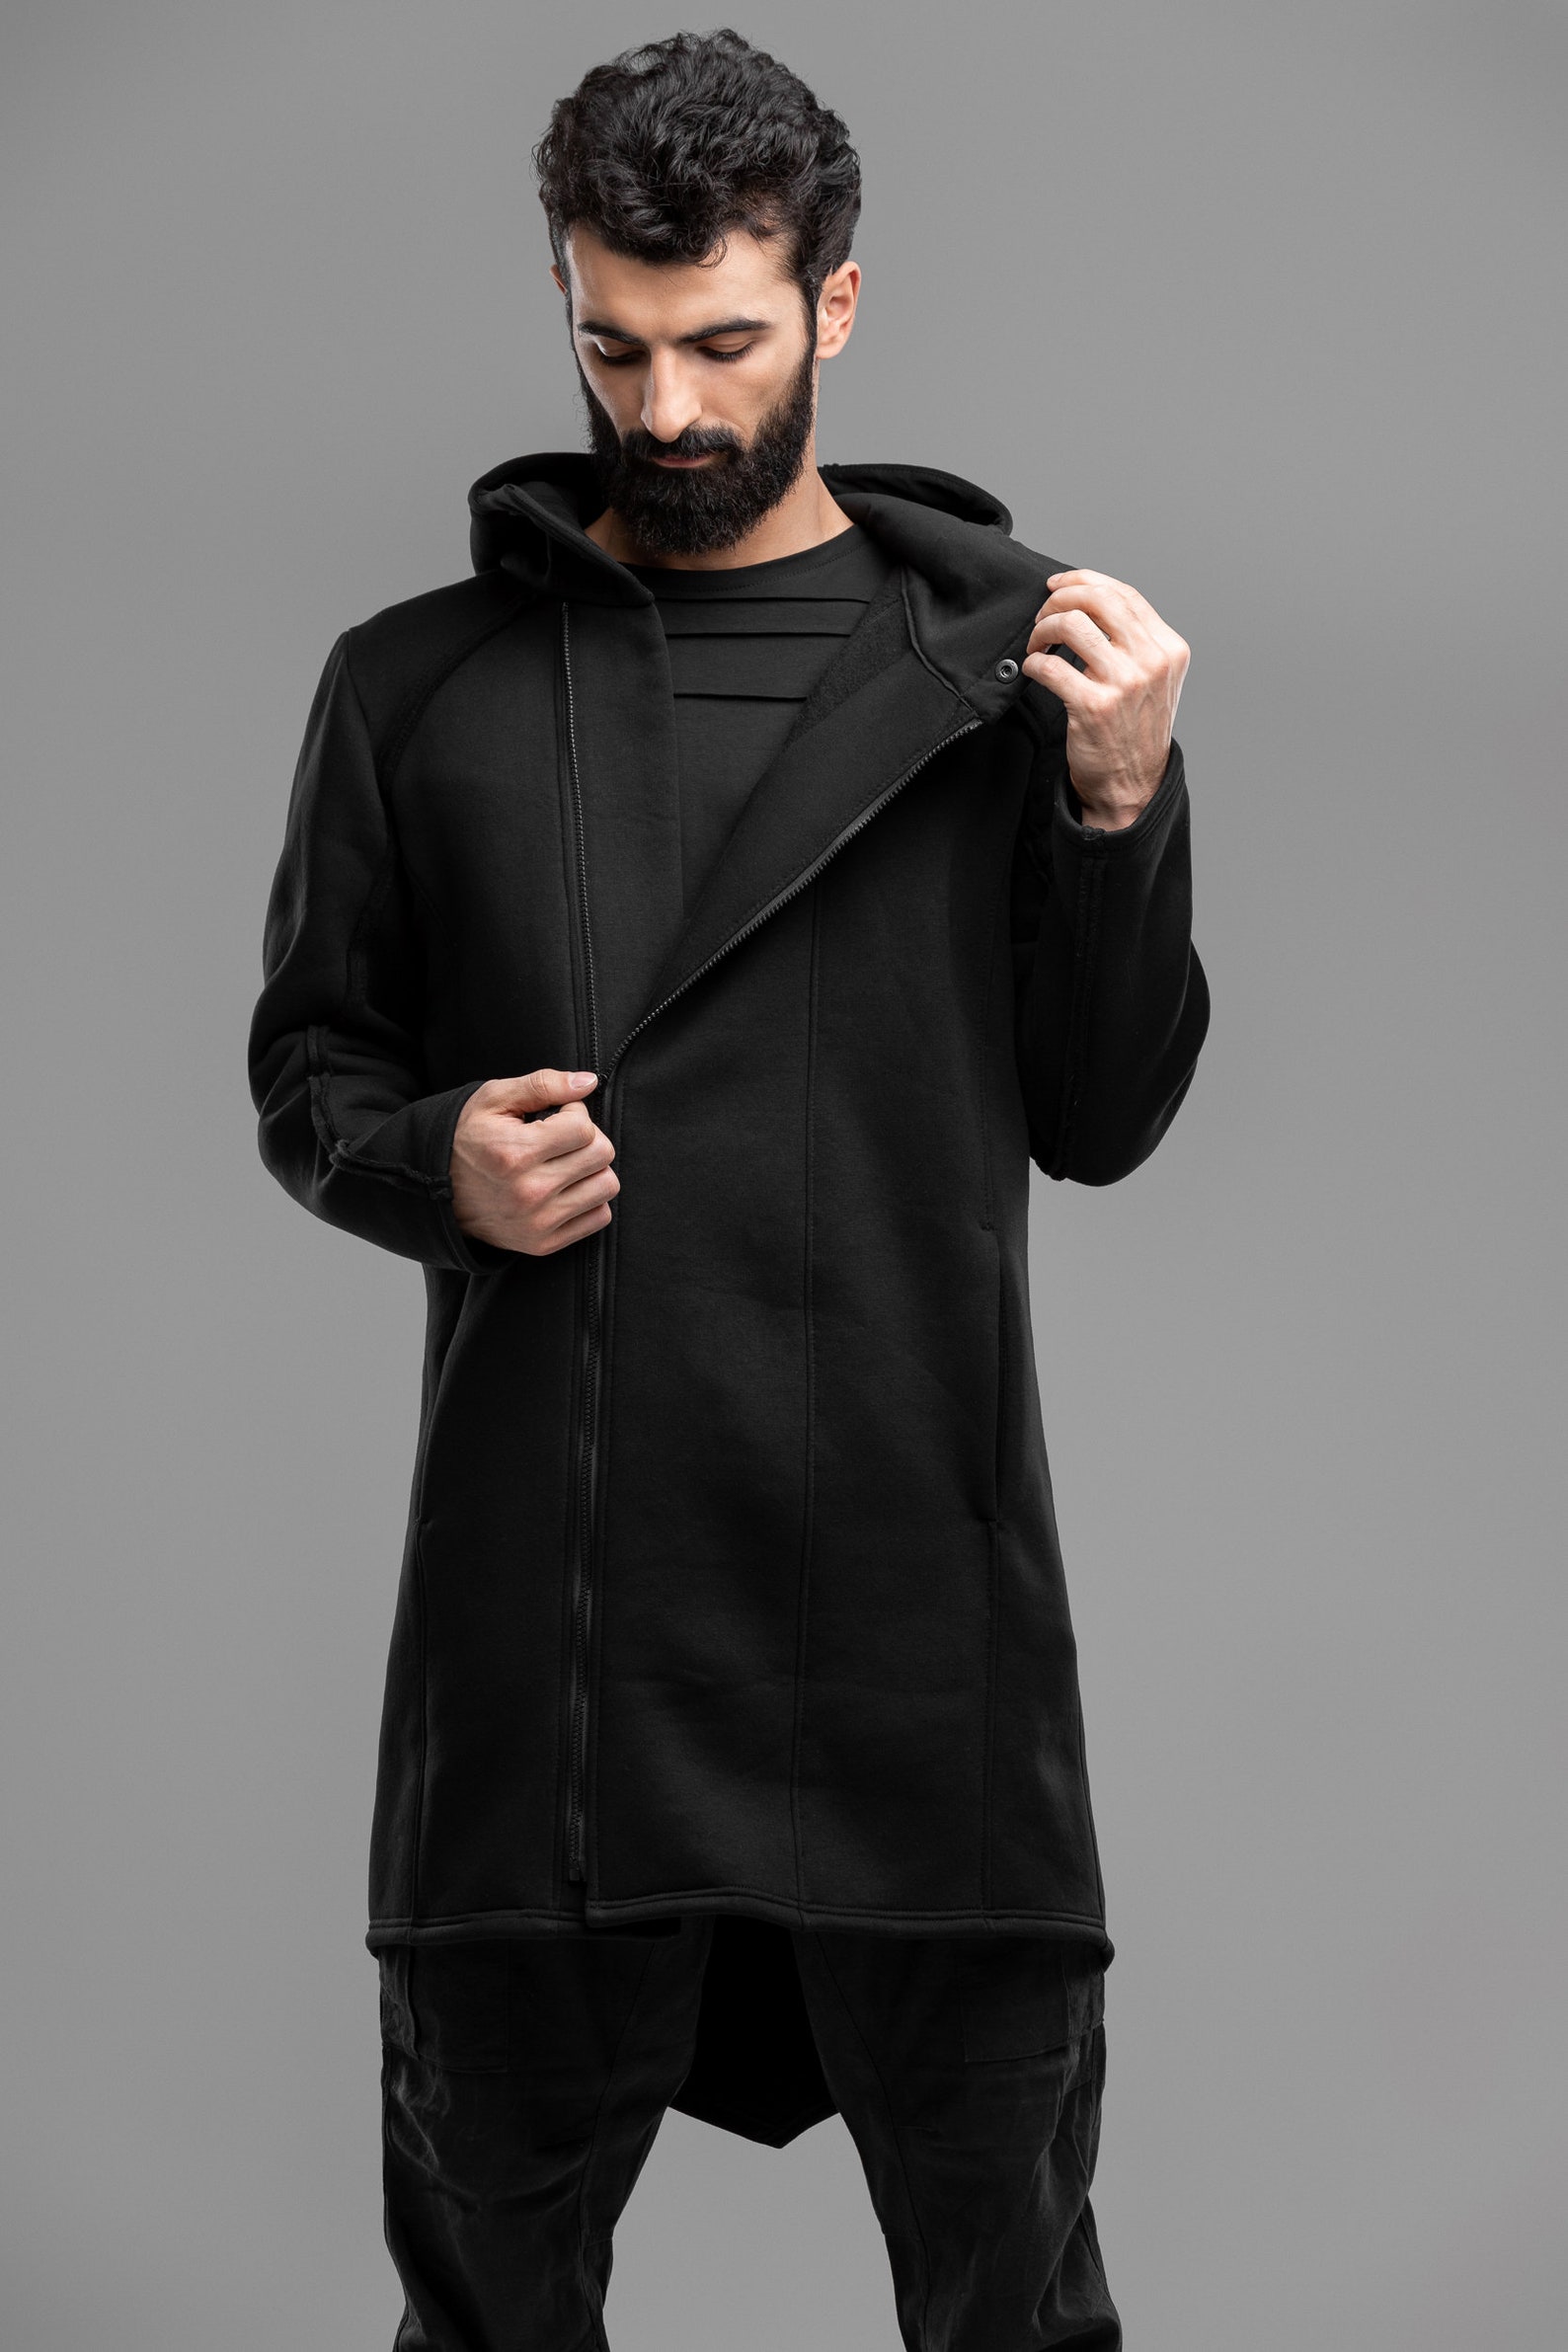 Cardigan Men Long Trench Coat Black Jacket Asymmetric Top | Etsy